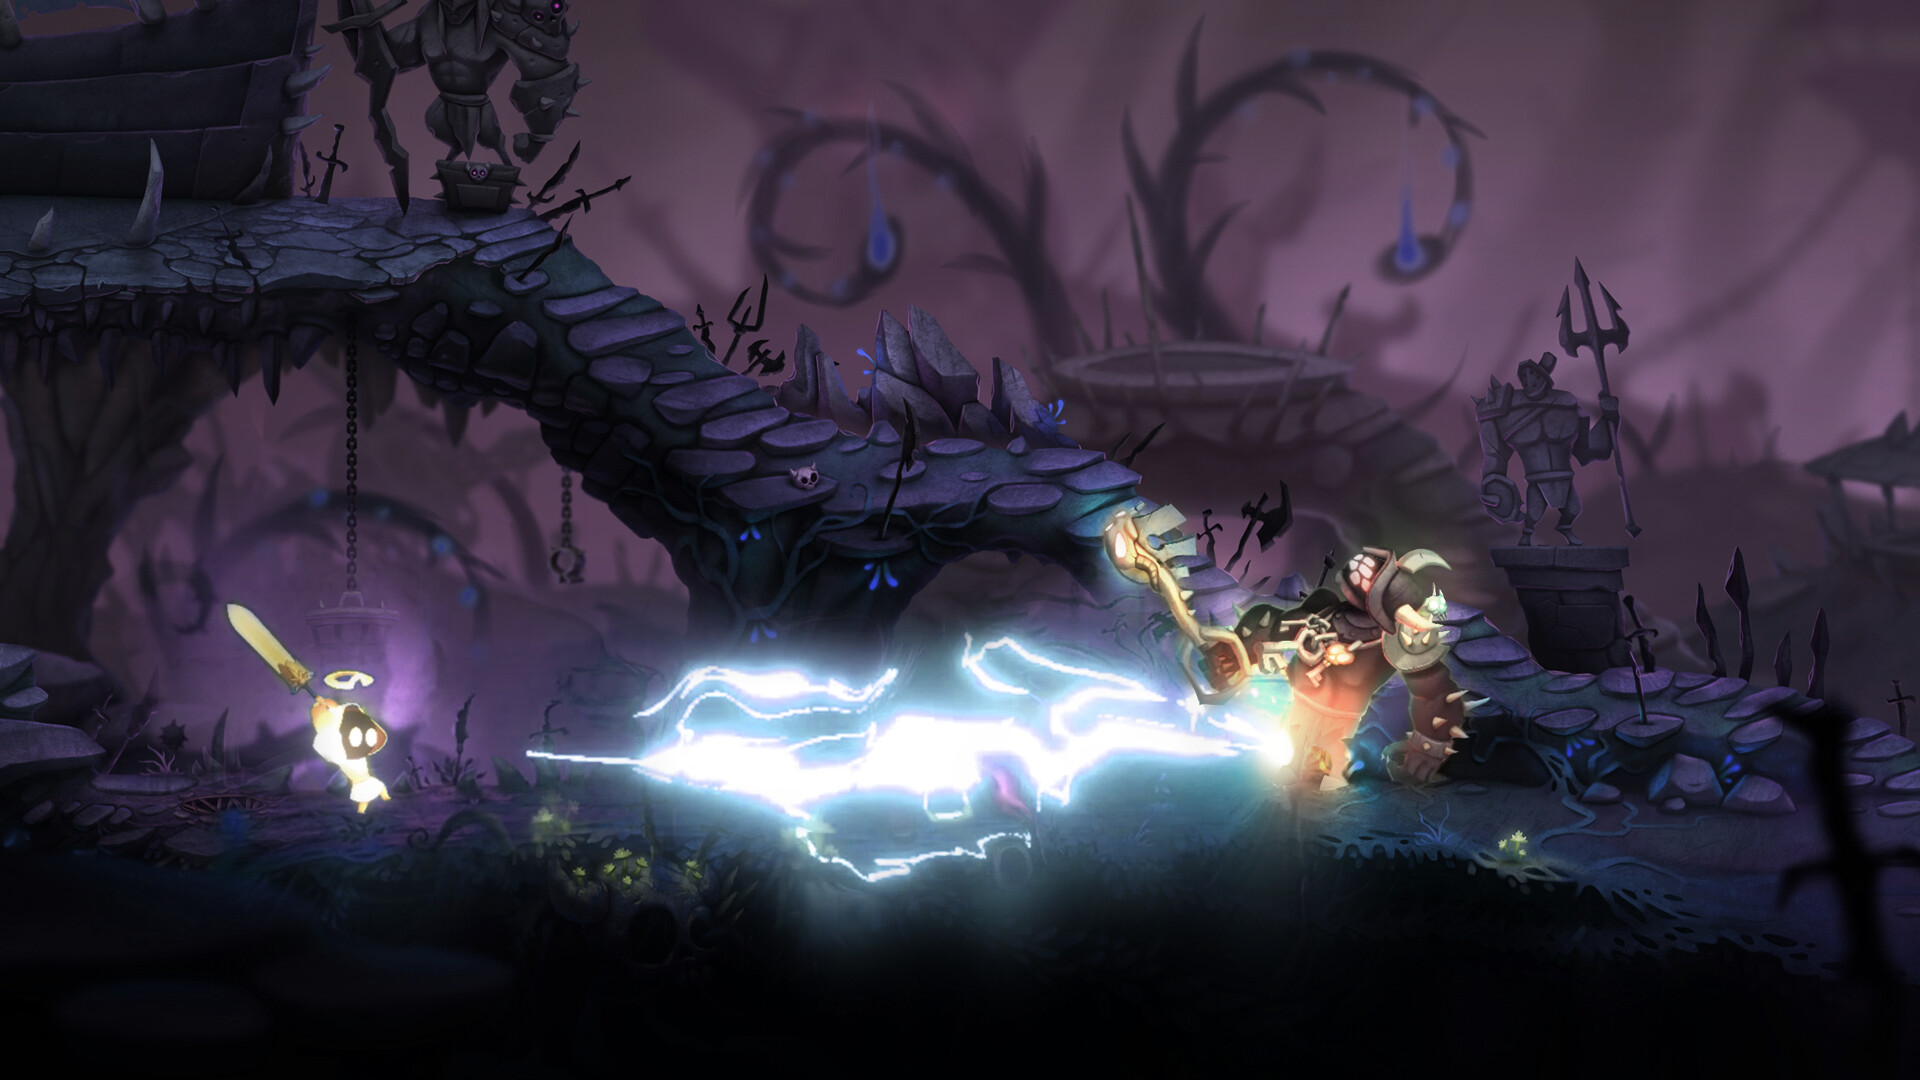 Comunidade Steam :: Dante's Inferno: An Animated Epic